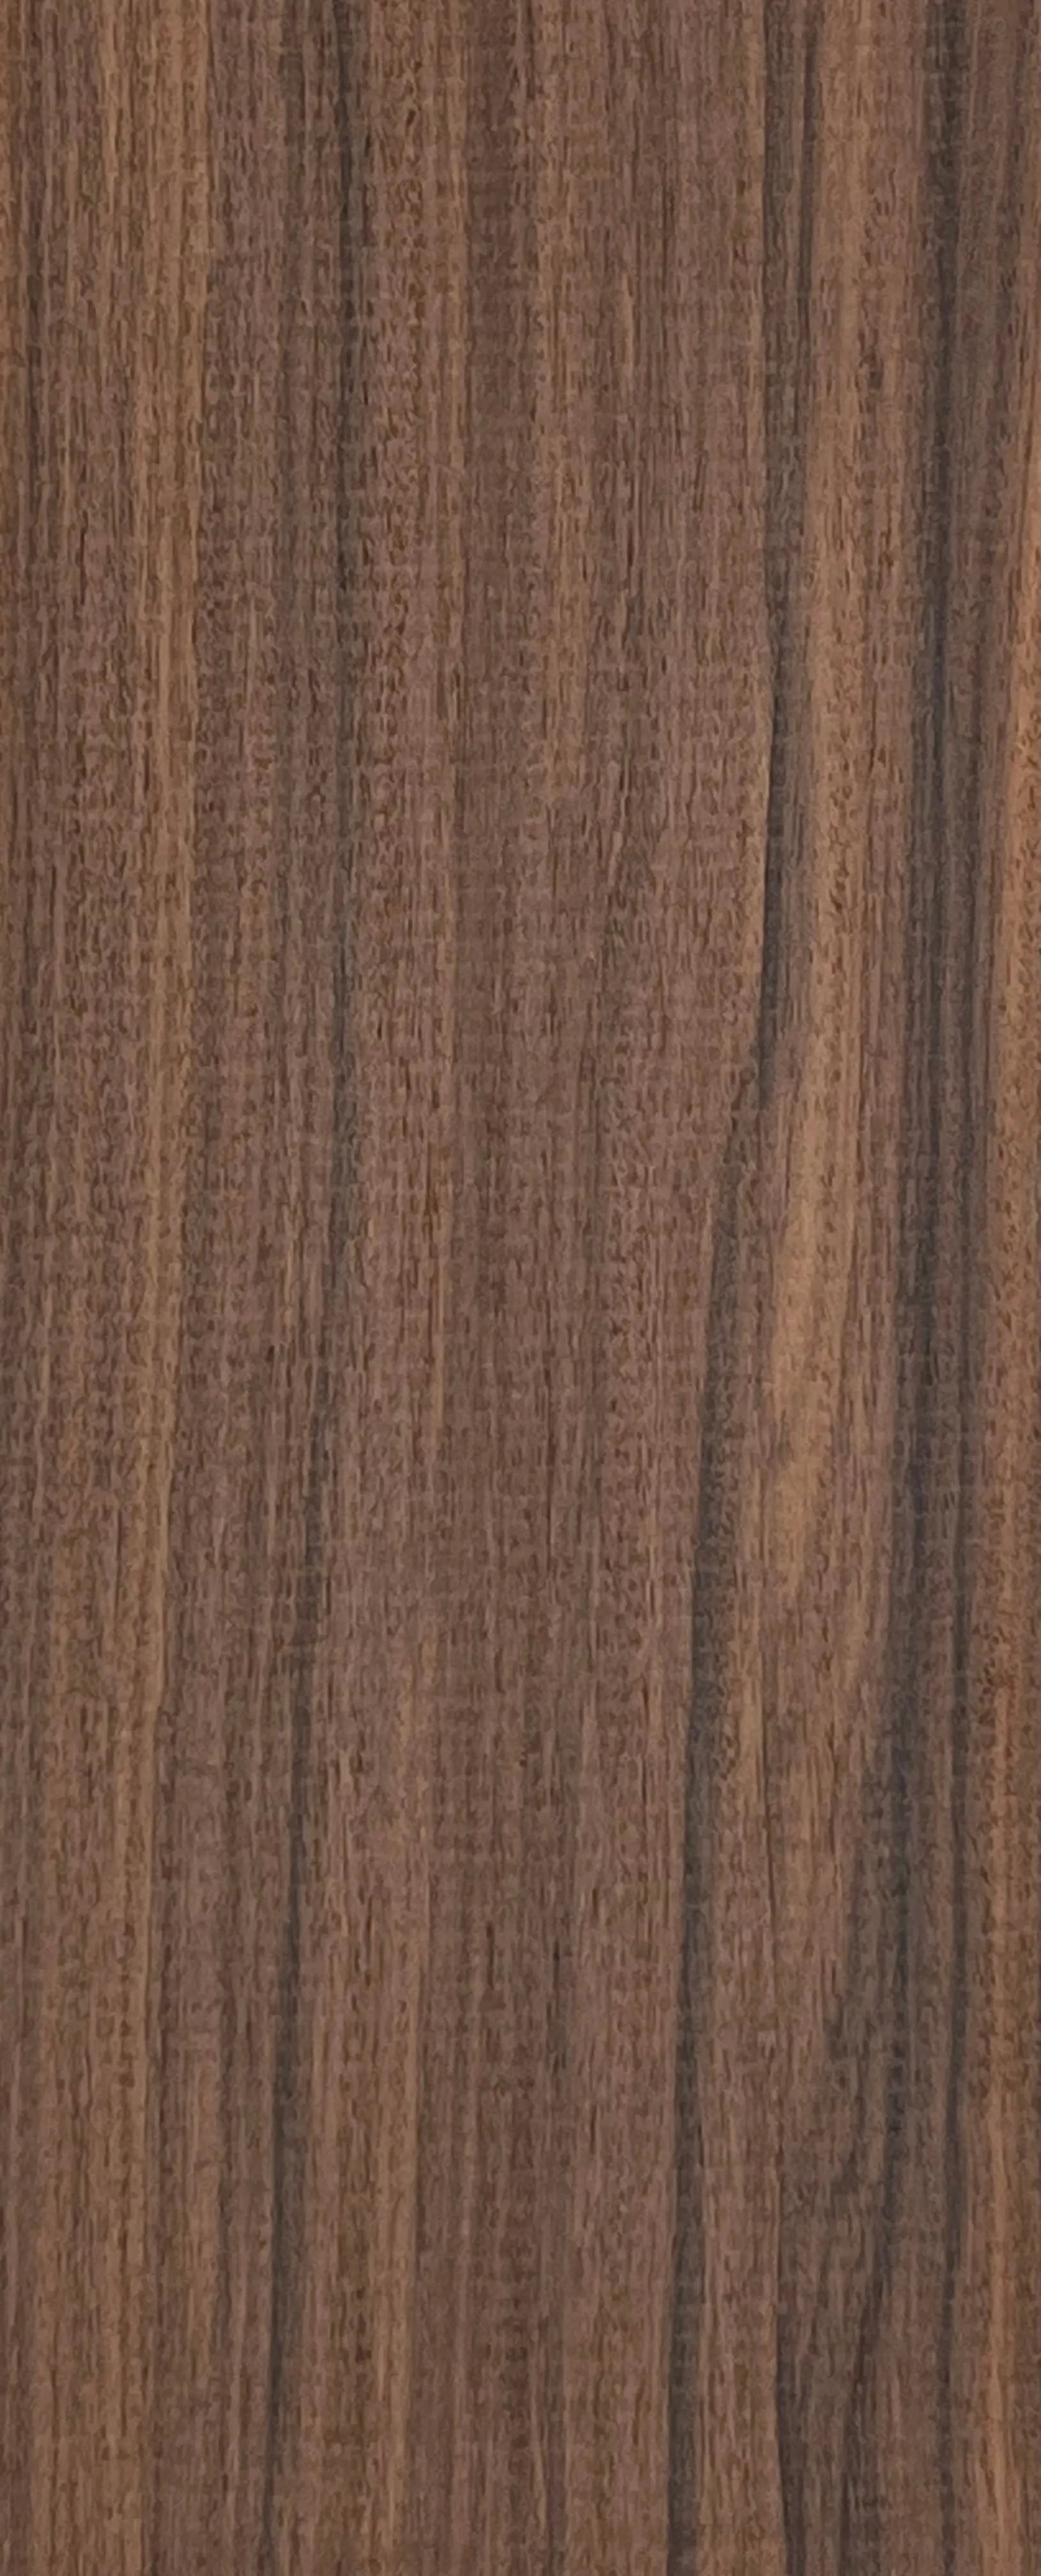 Santos Rosewood / Morado Thin Stock Lumber Boards Wood Crafts - Exotic Wood Zone - Buy online Across USA 